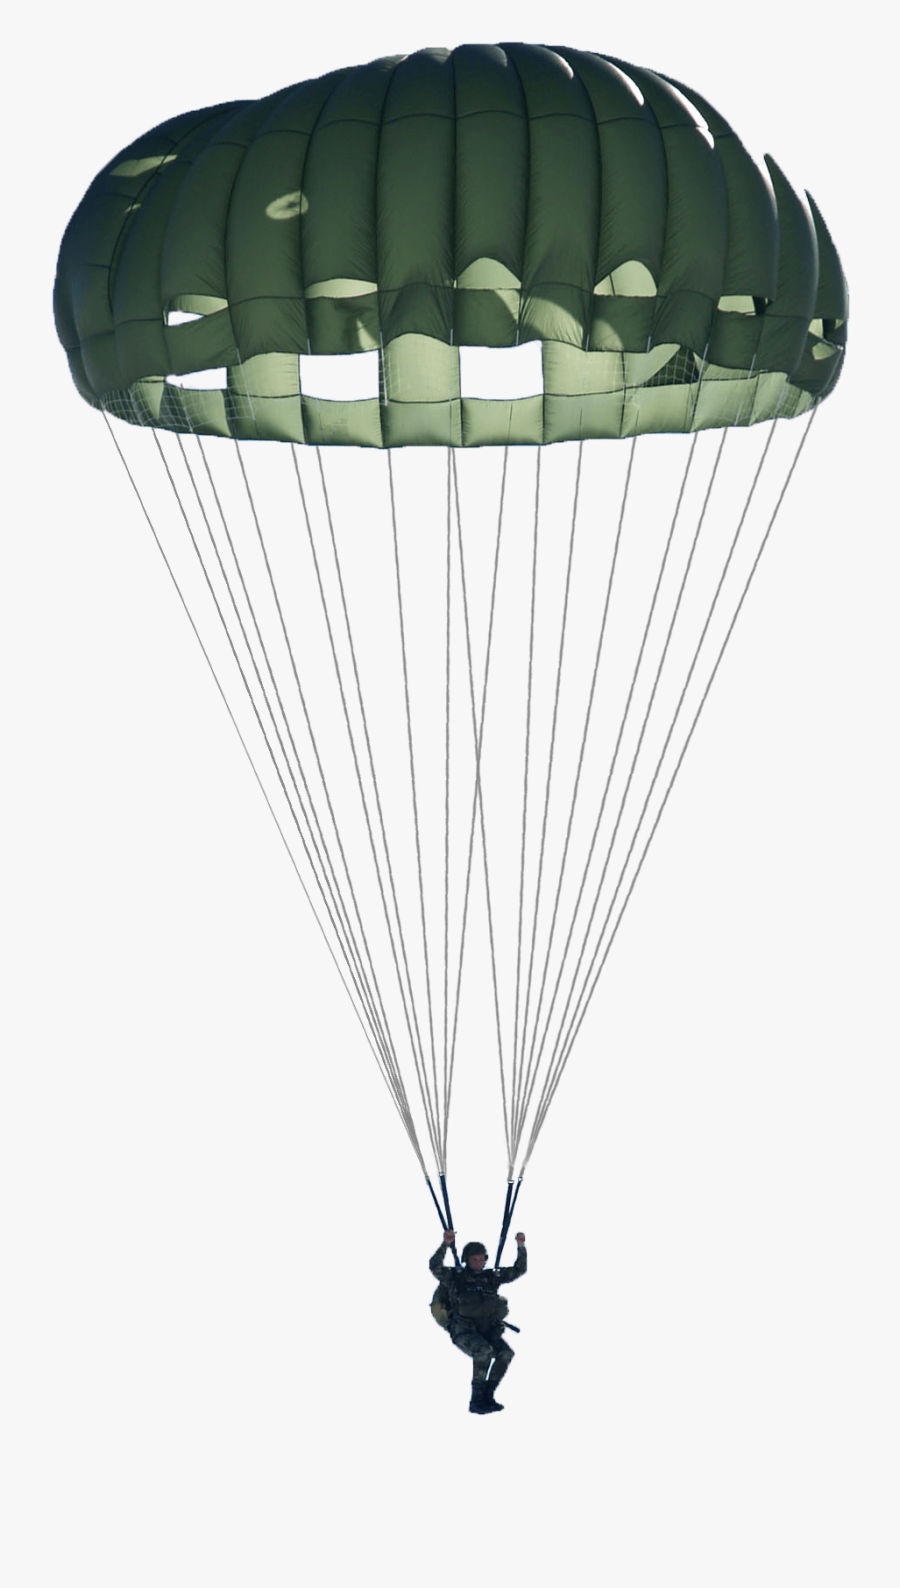 Green Military Parachute - Parachute Transparent, Transparent Clipart